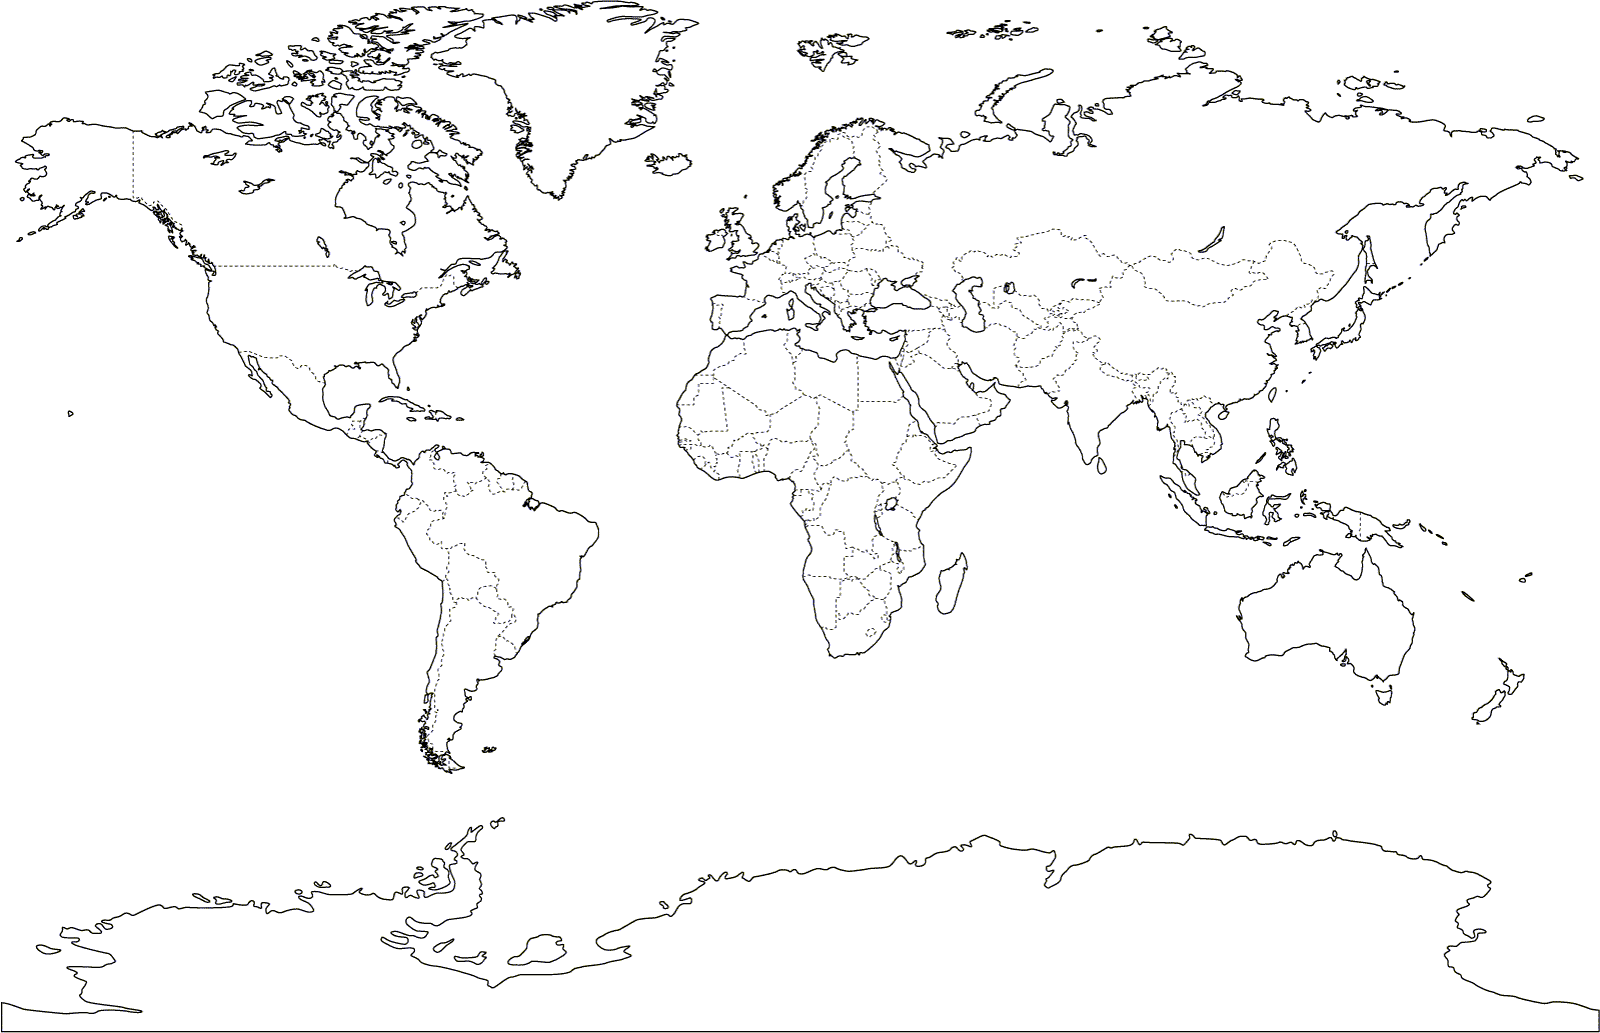 World+map+blank+political